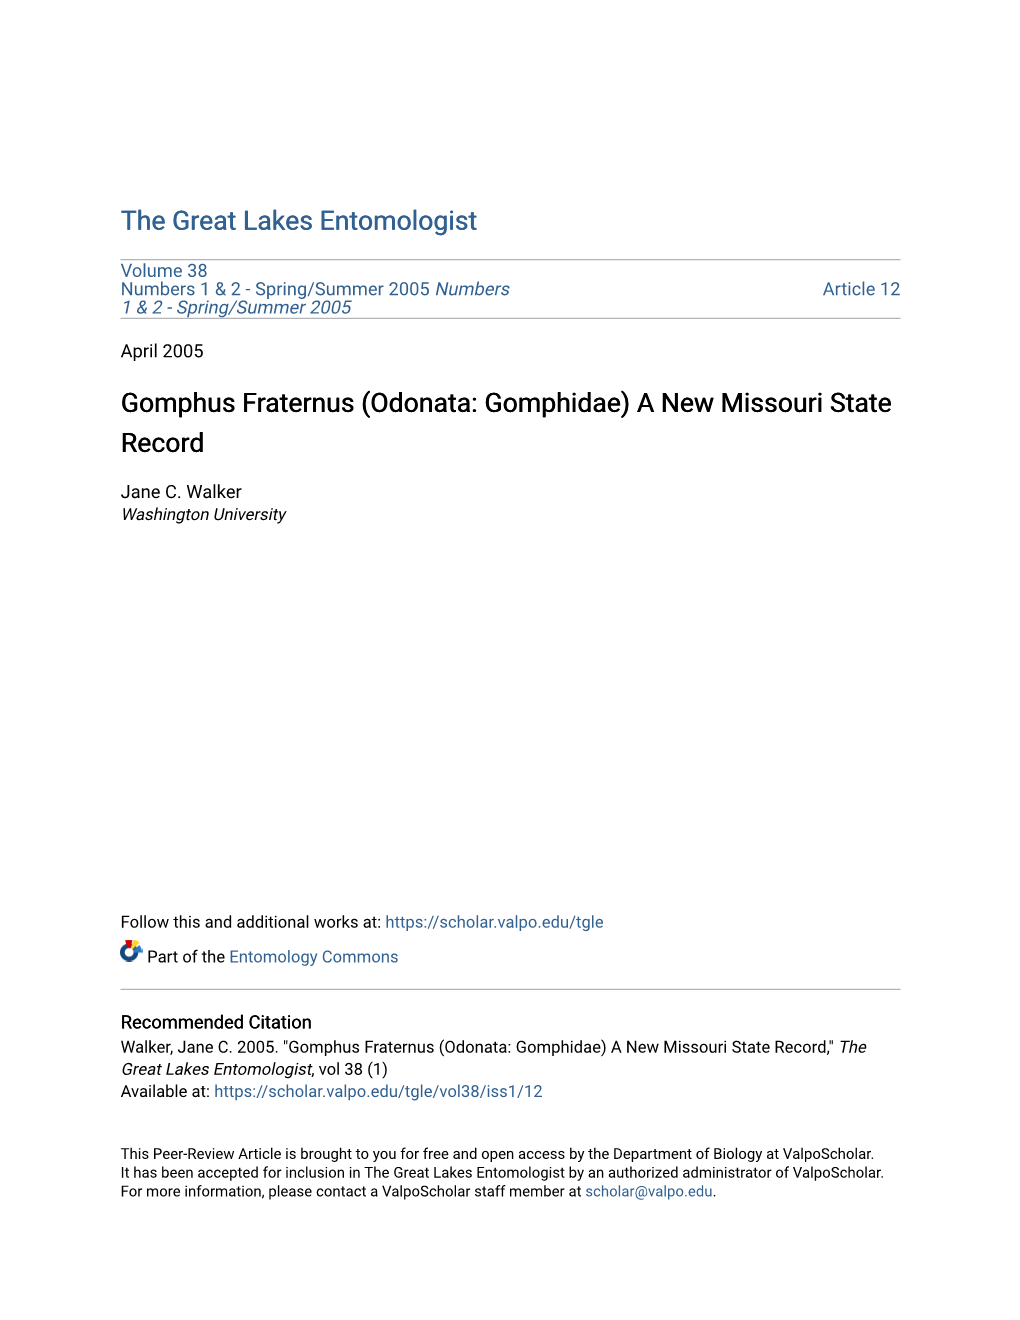 Odonata: Gomphidae) a New Missouri State Record